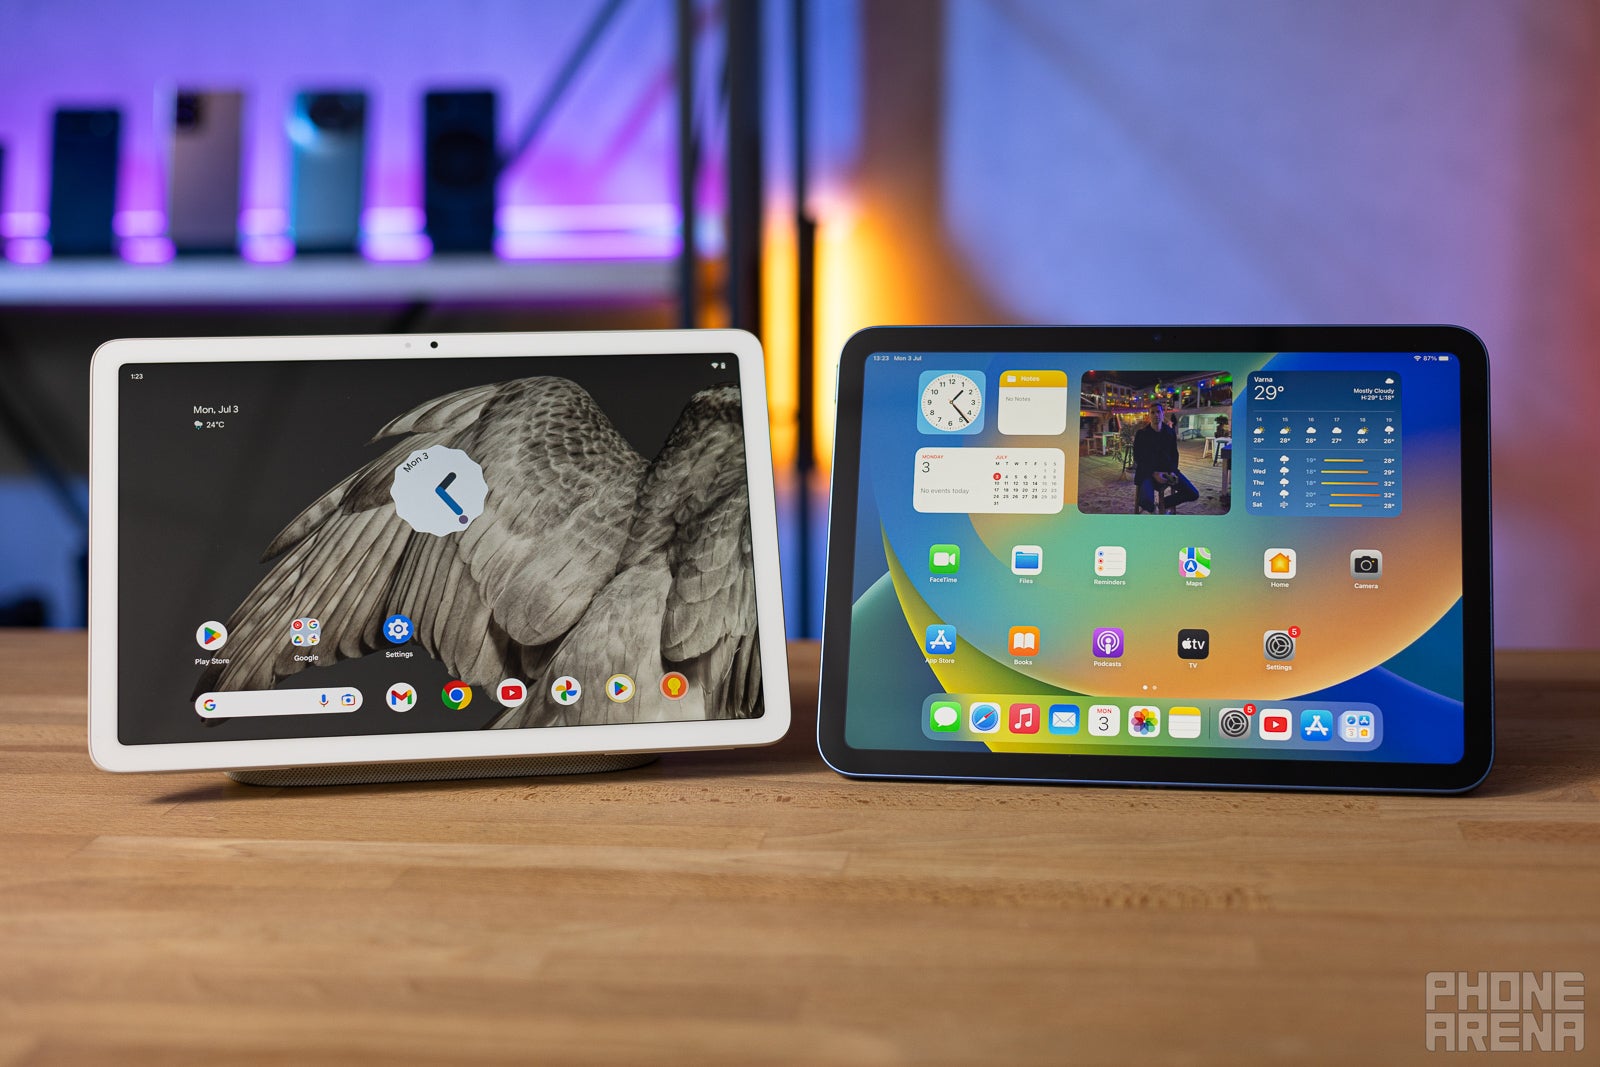 Google Pixel Tablet vs iPad (10th Gen): Google takes on Apple